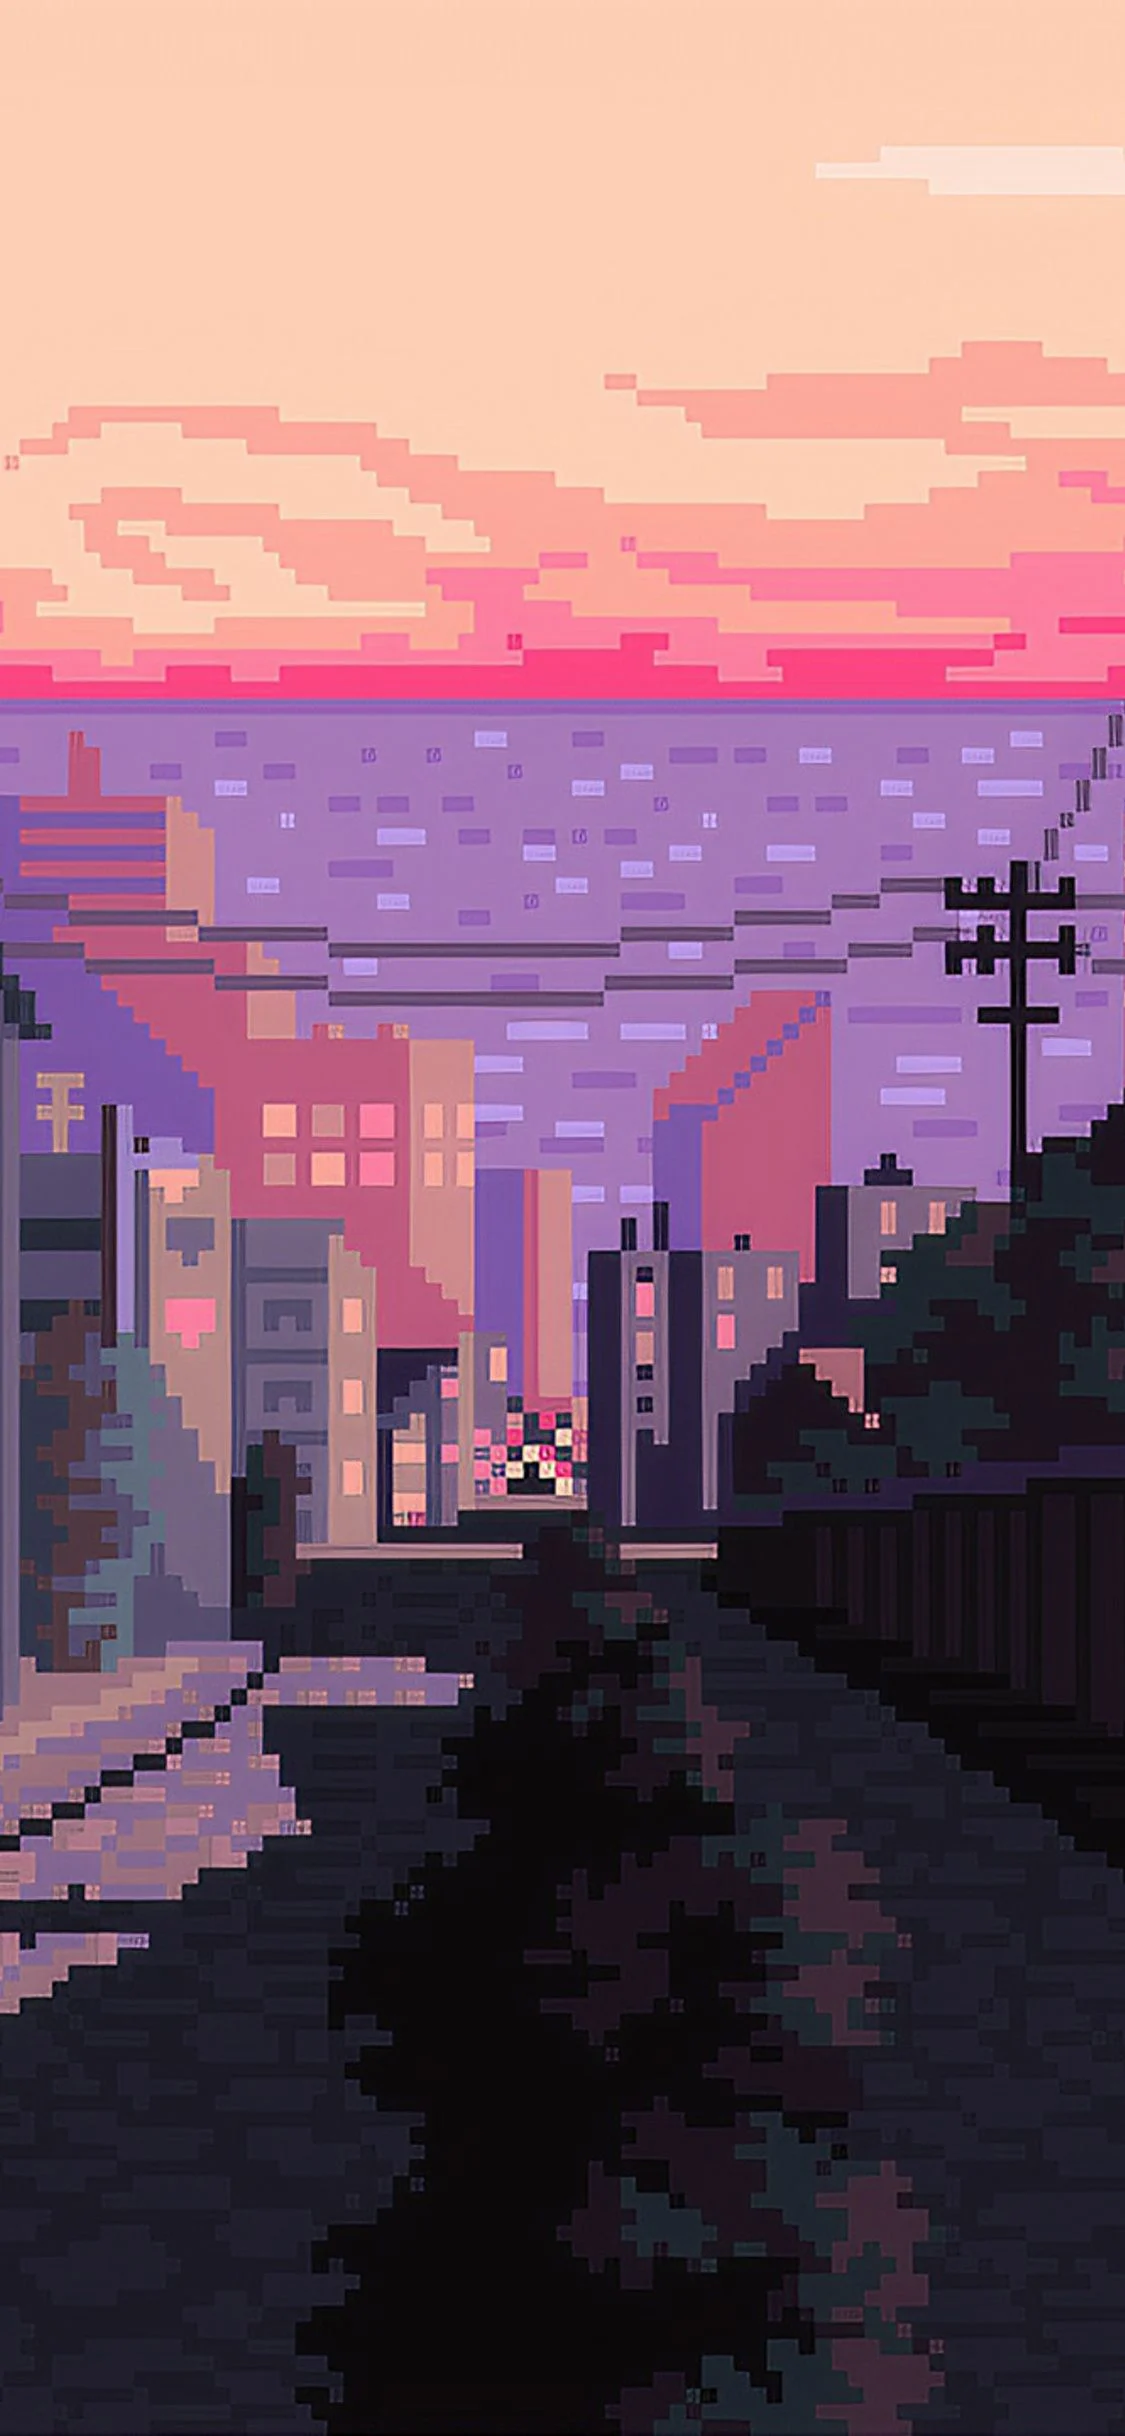 Pixel art Wallpaper